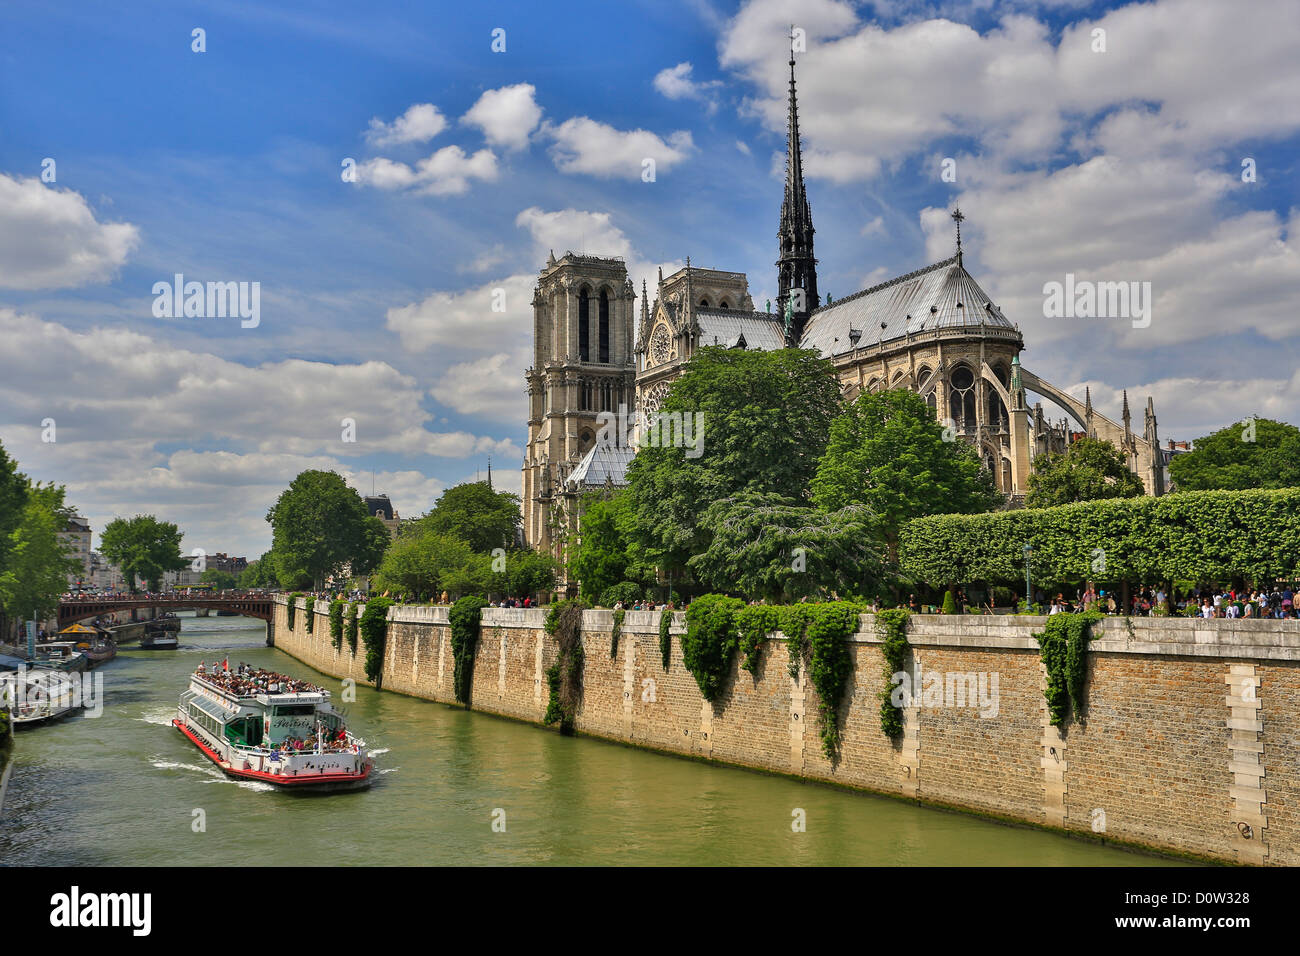 France, Europe, travel, Paris, City, Notre Dame, architecture, cathedral, catholic, gothic, history, boat, skyline, tourism, Une Stock Photo